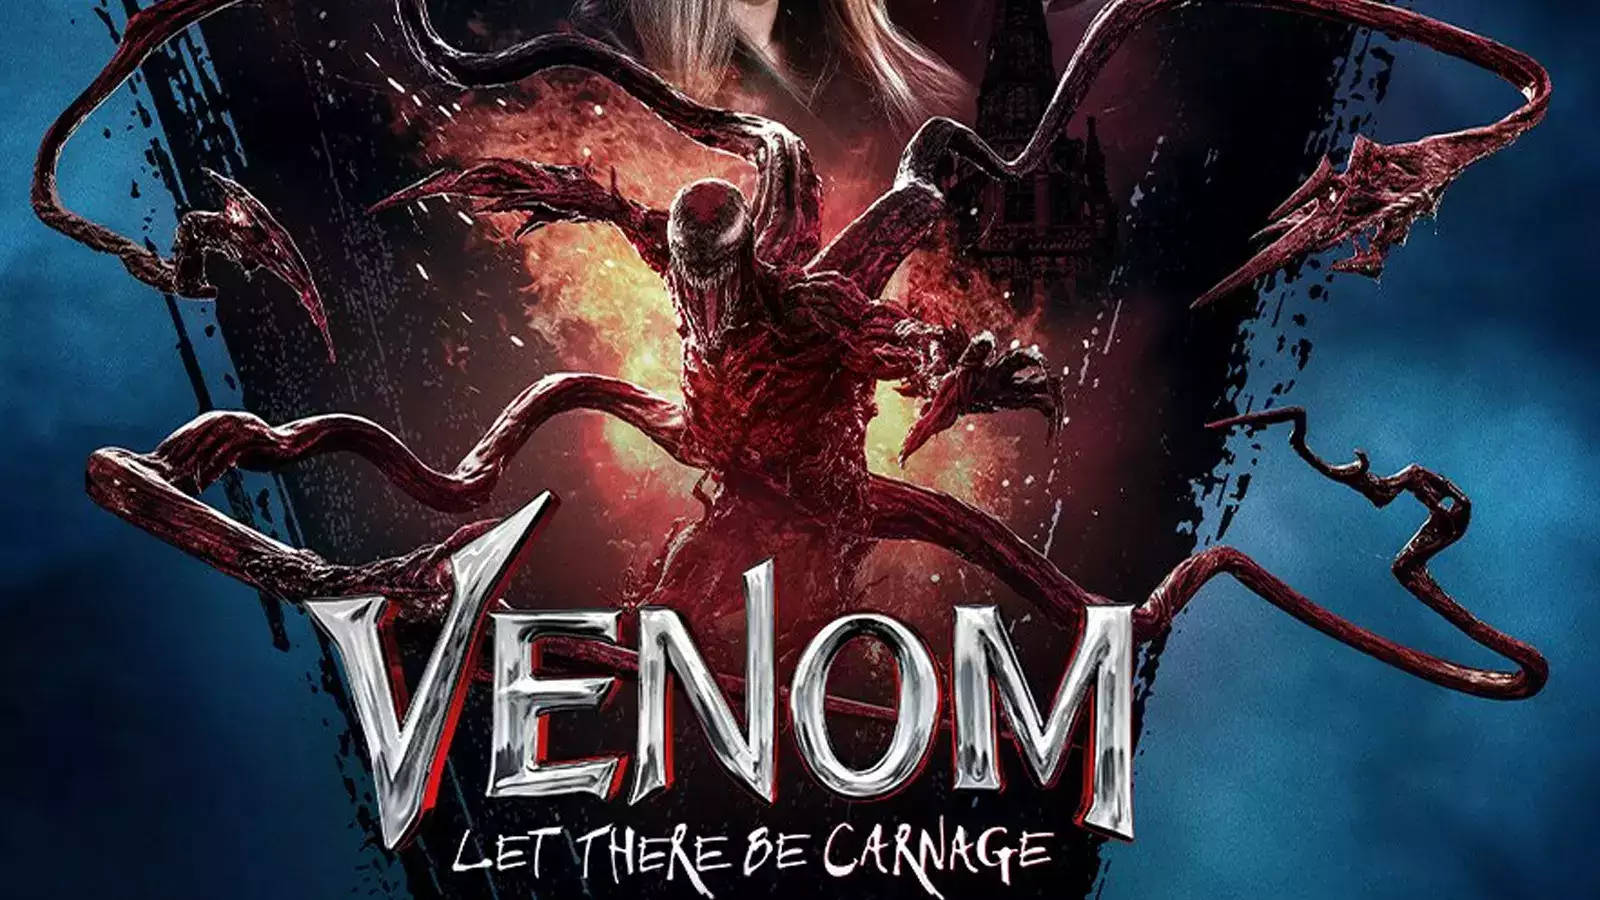 Venom Carnage Artwork Picture